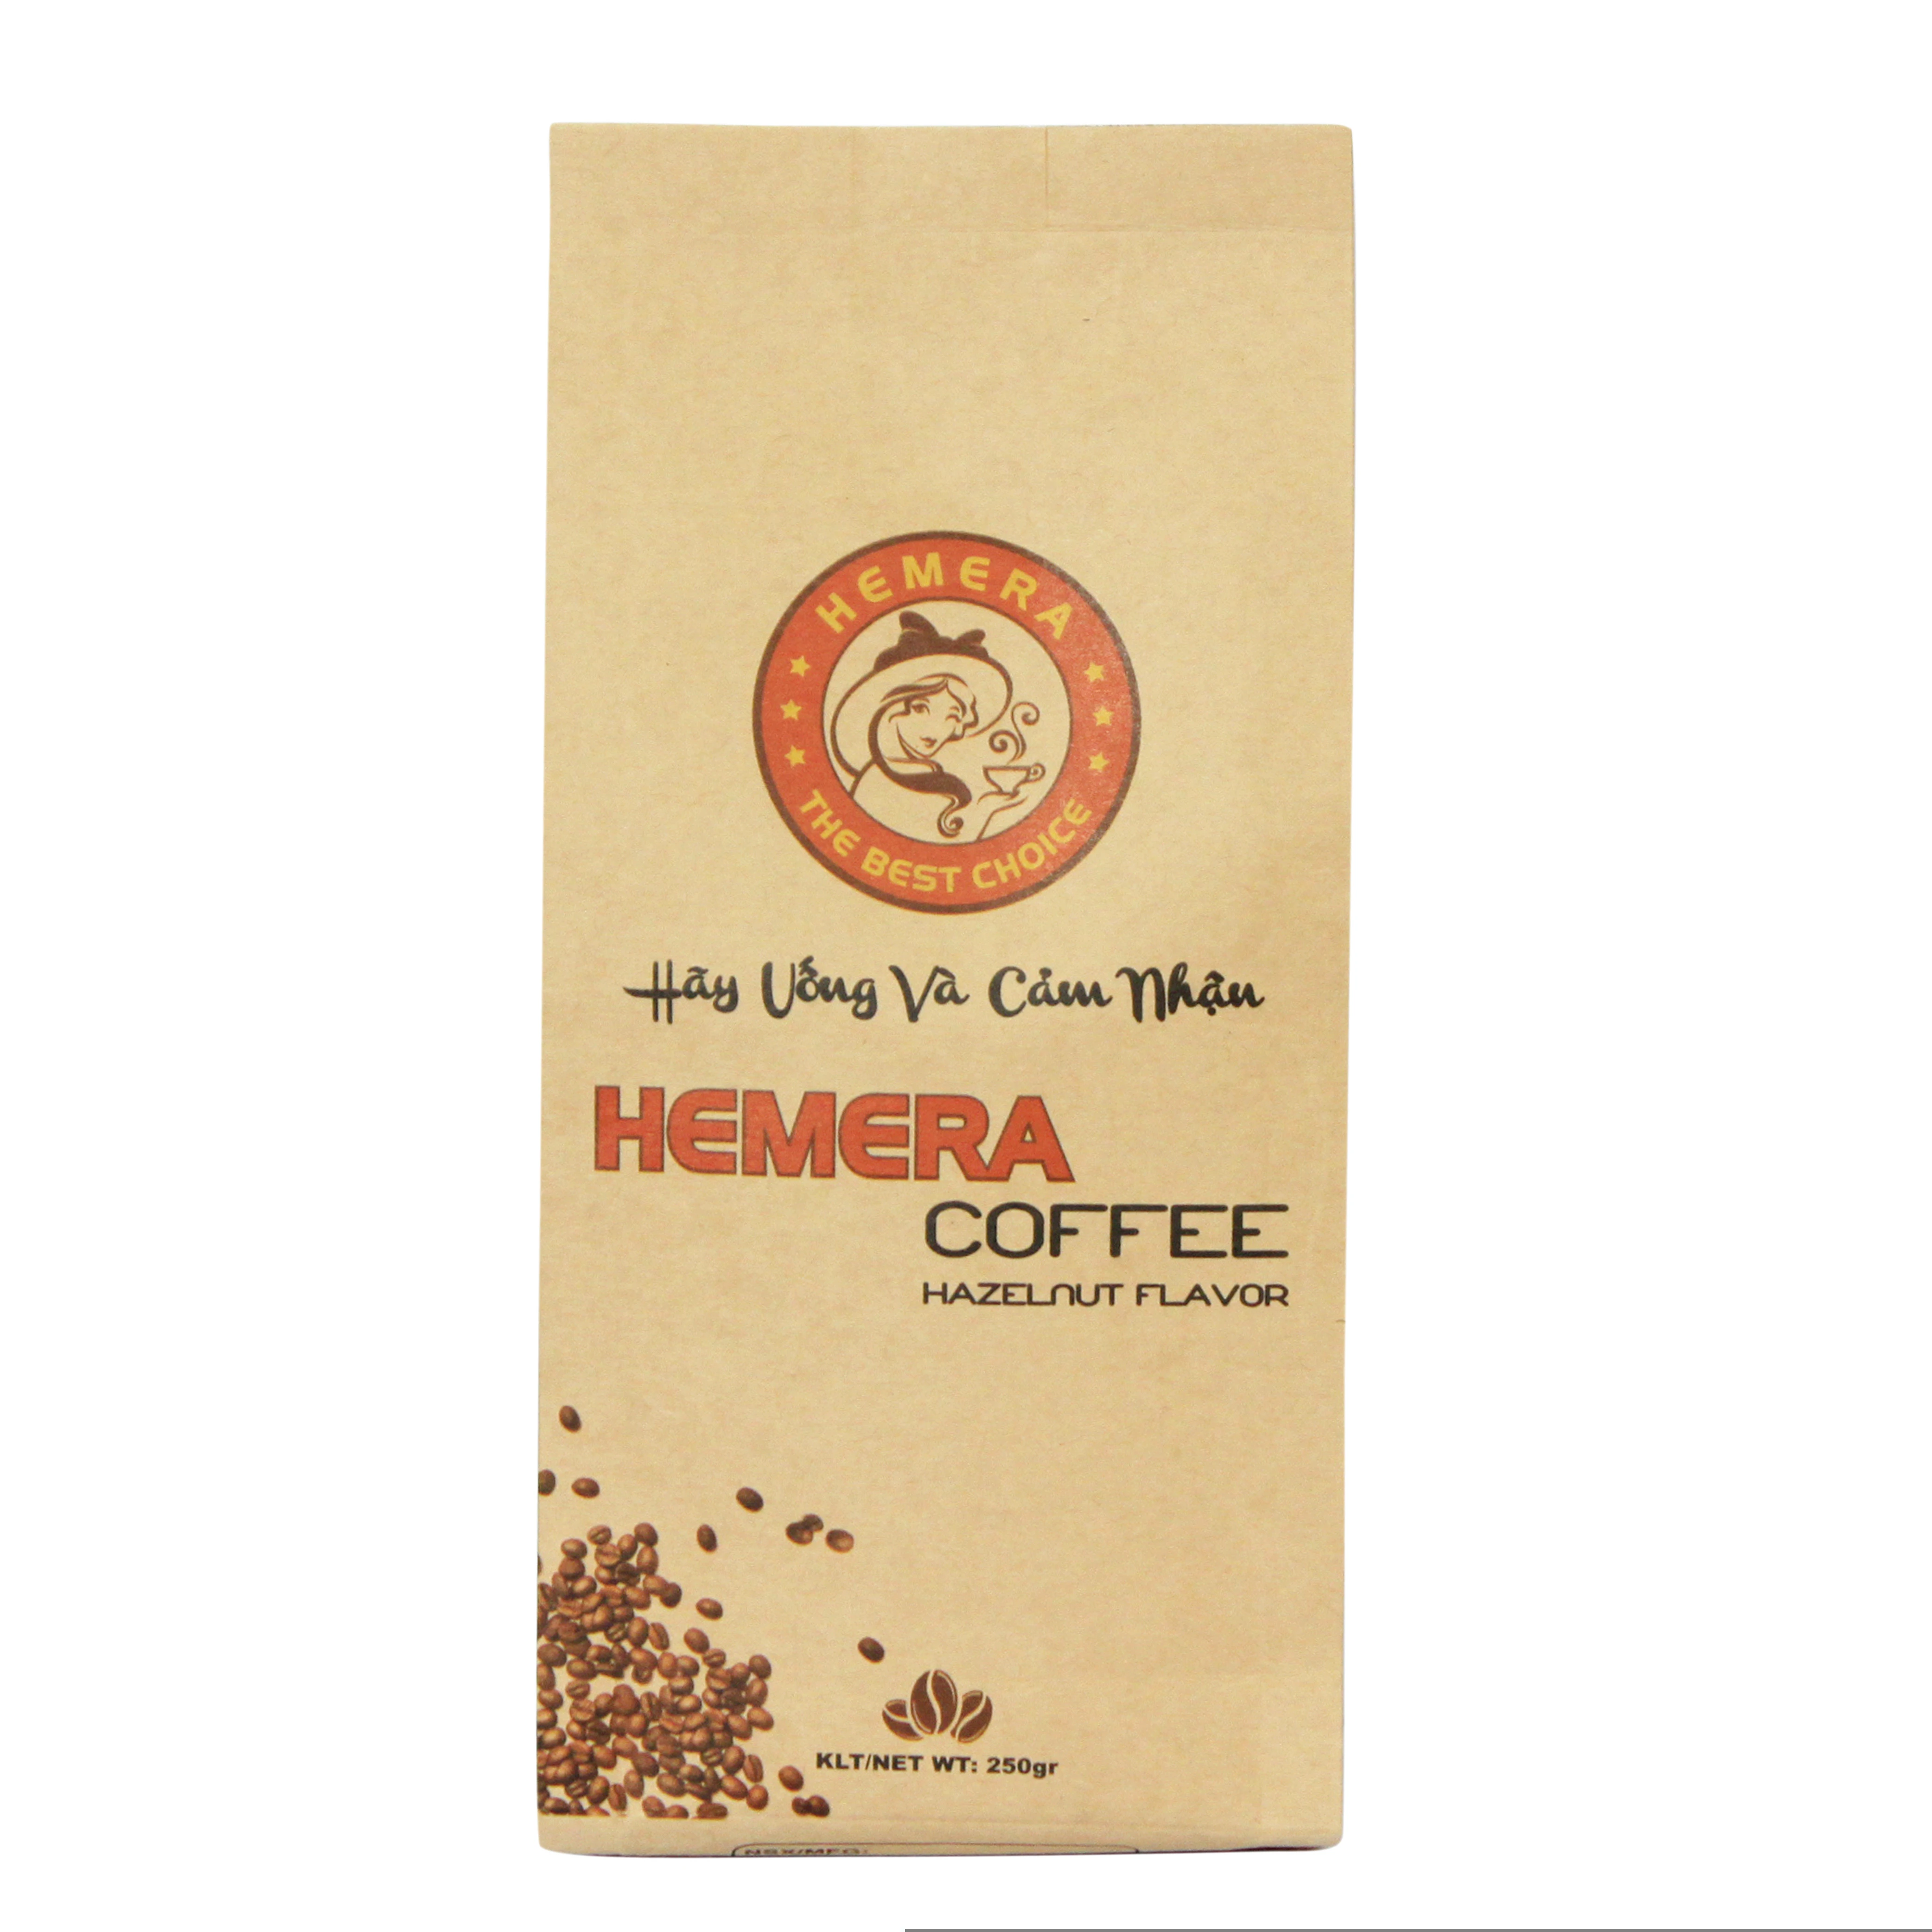 Vietnamese Highland Roasted Hazelnut Coffee Flavour From AVC Hemera